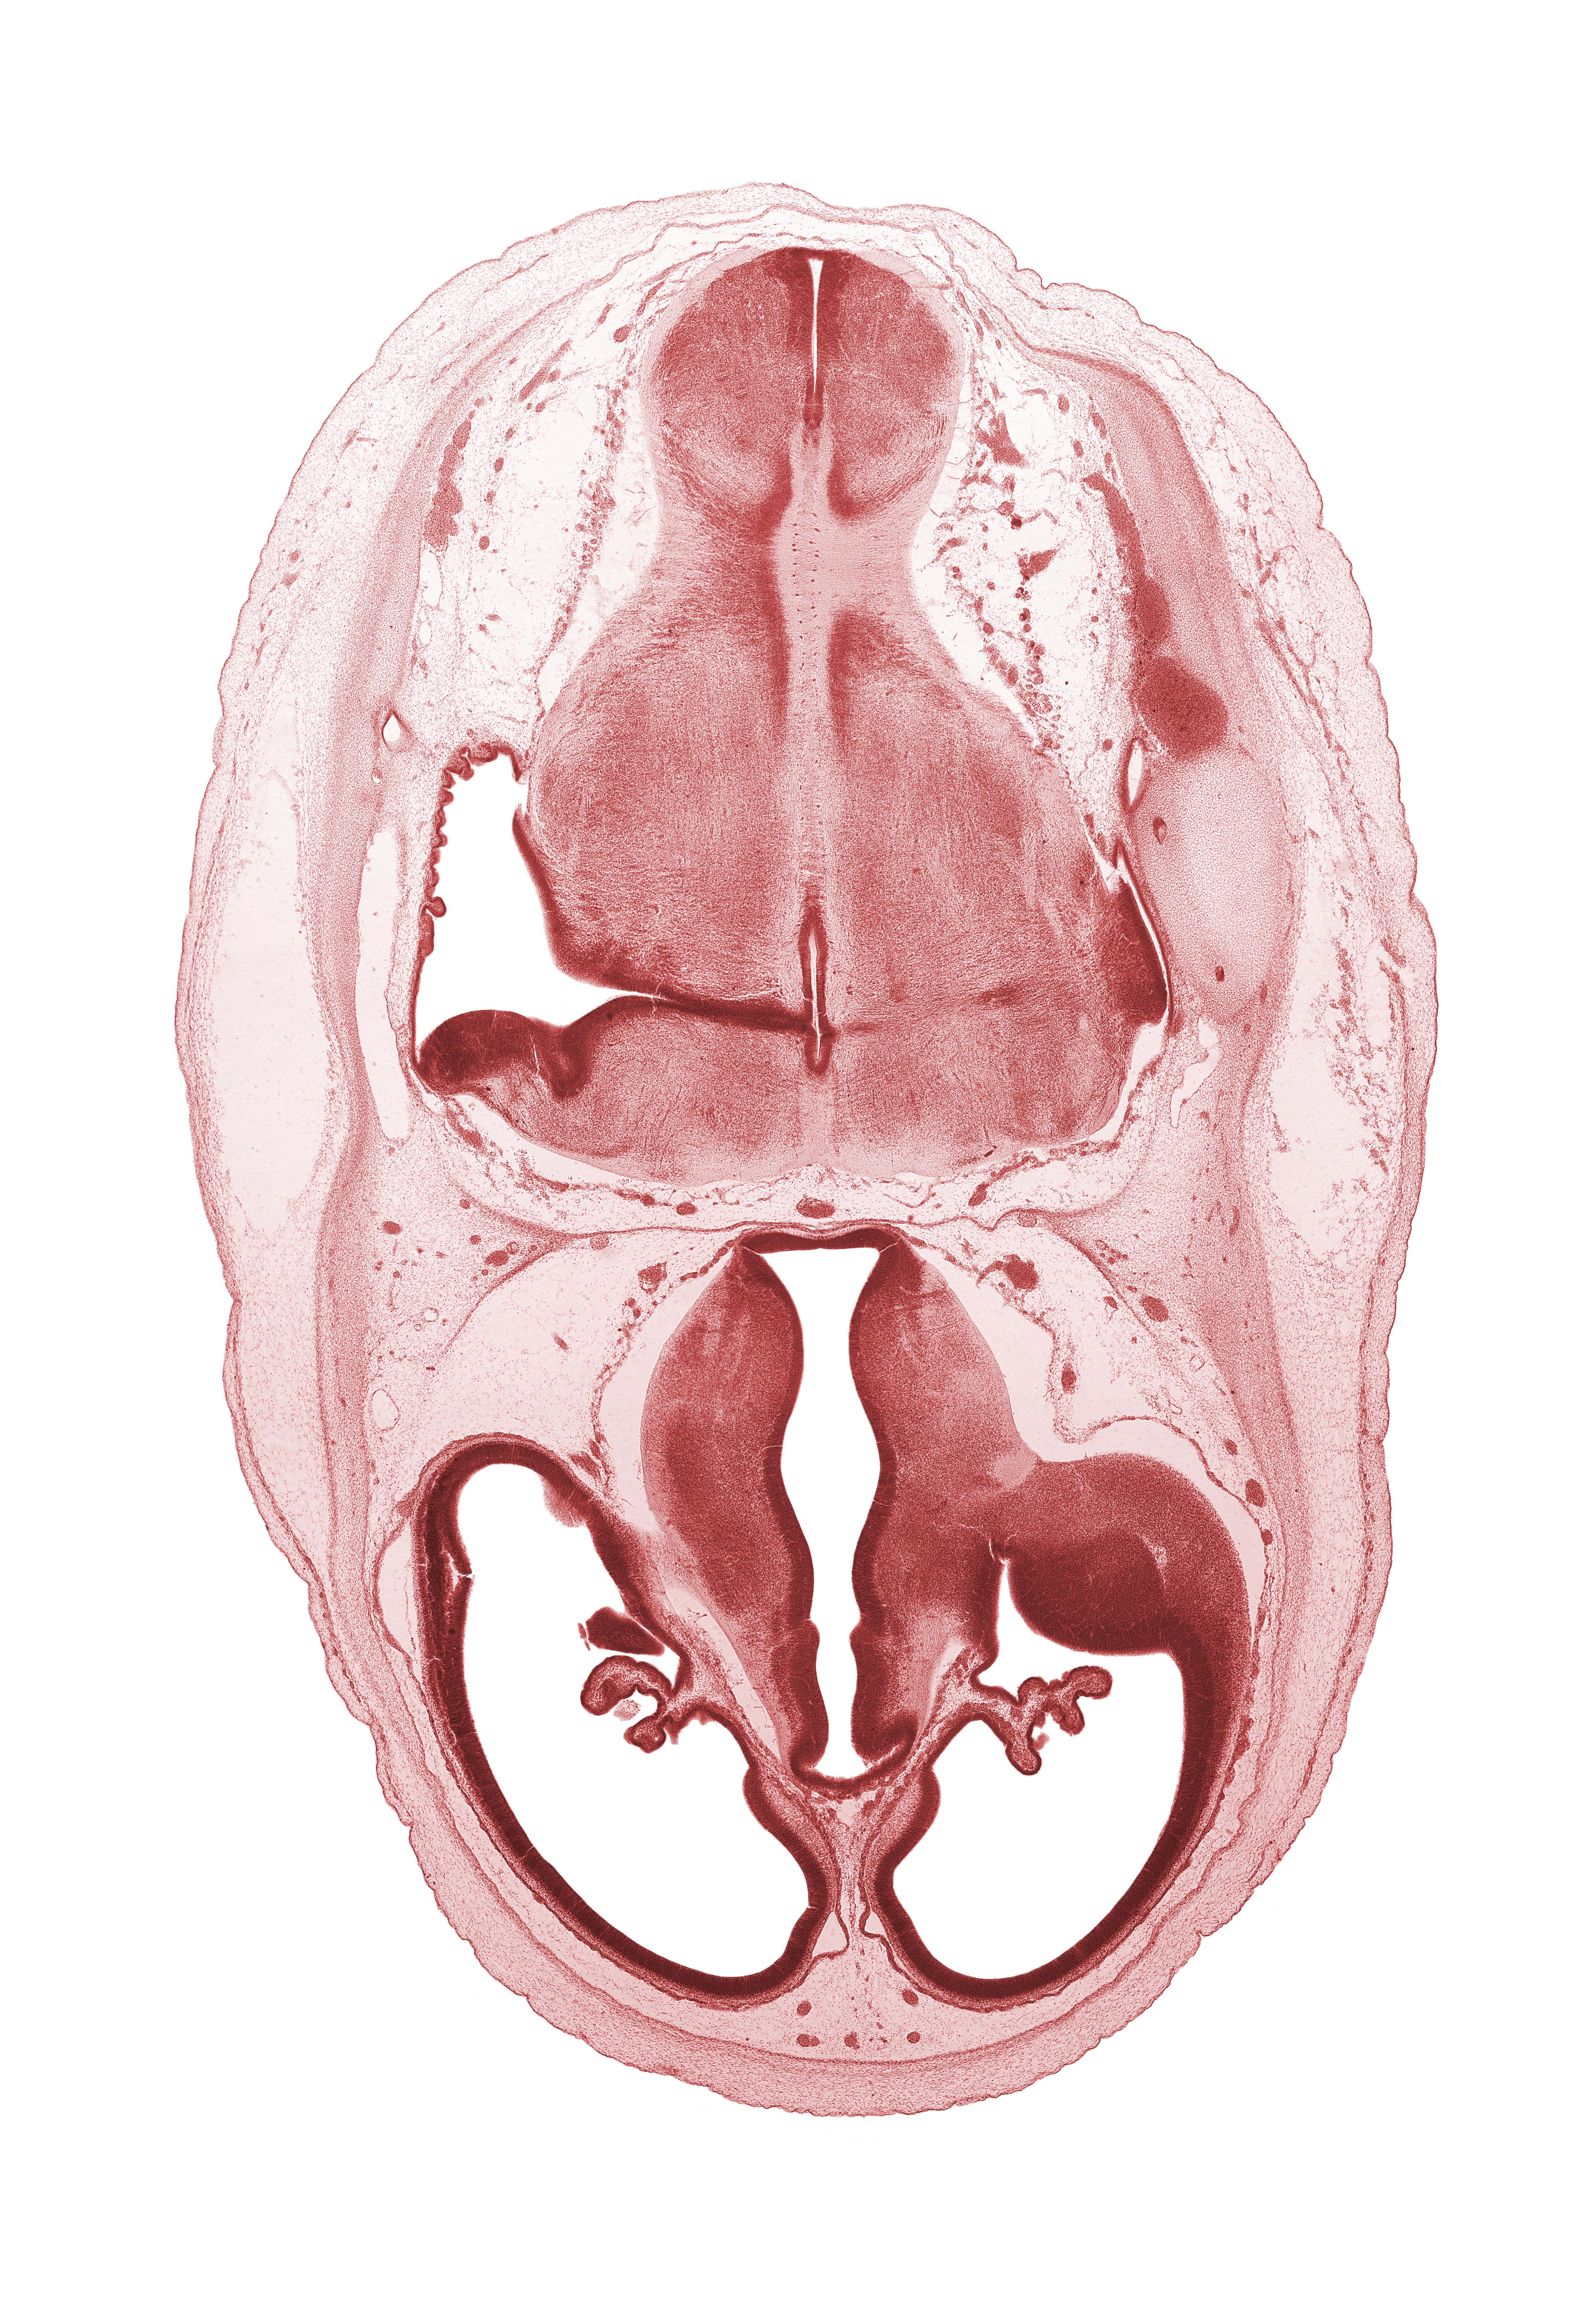 artifact separation(s), basilar artery, central canal, choroid plexus, dorsal thalamus, endolymphatic sac, falx cerebri region, hypothalamic sulcus, hypothalamus, lateral ventricle, marginal ridge, median sulcus, myelencephalon (medulla oblongata), osteogenic layer, posterior communicating artery, root of glossopharyngeal nerve (CN IX), stem of posterior dural venous plexus, sulcus dorsalis, sulcus medius, surface ectoderm, venous plexus(es), ventral thalamus